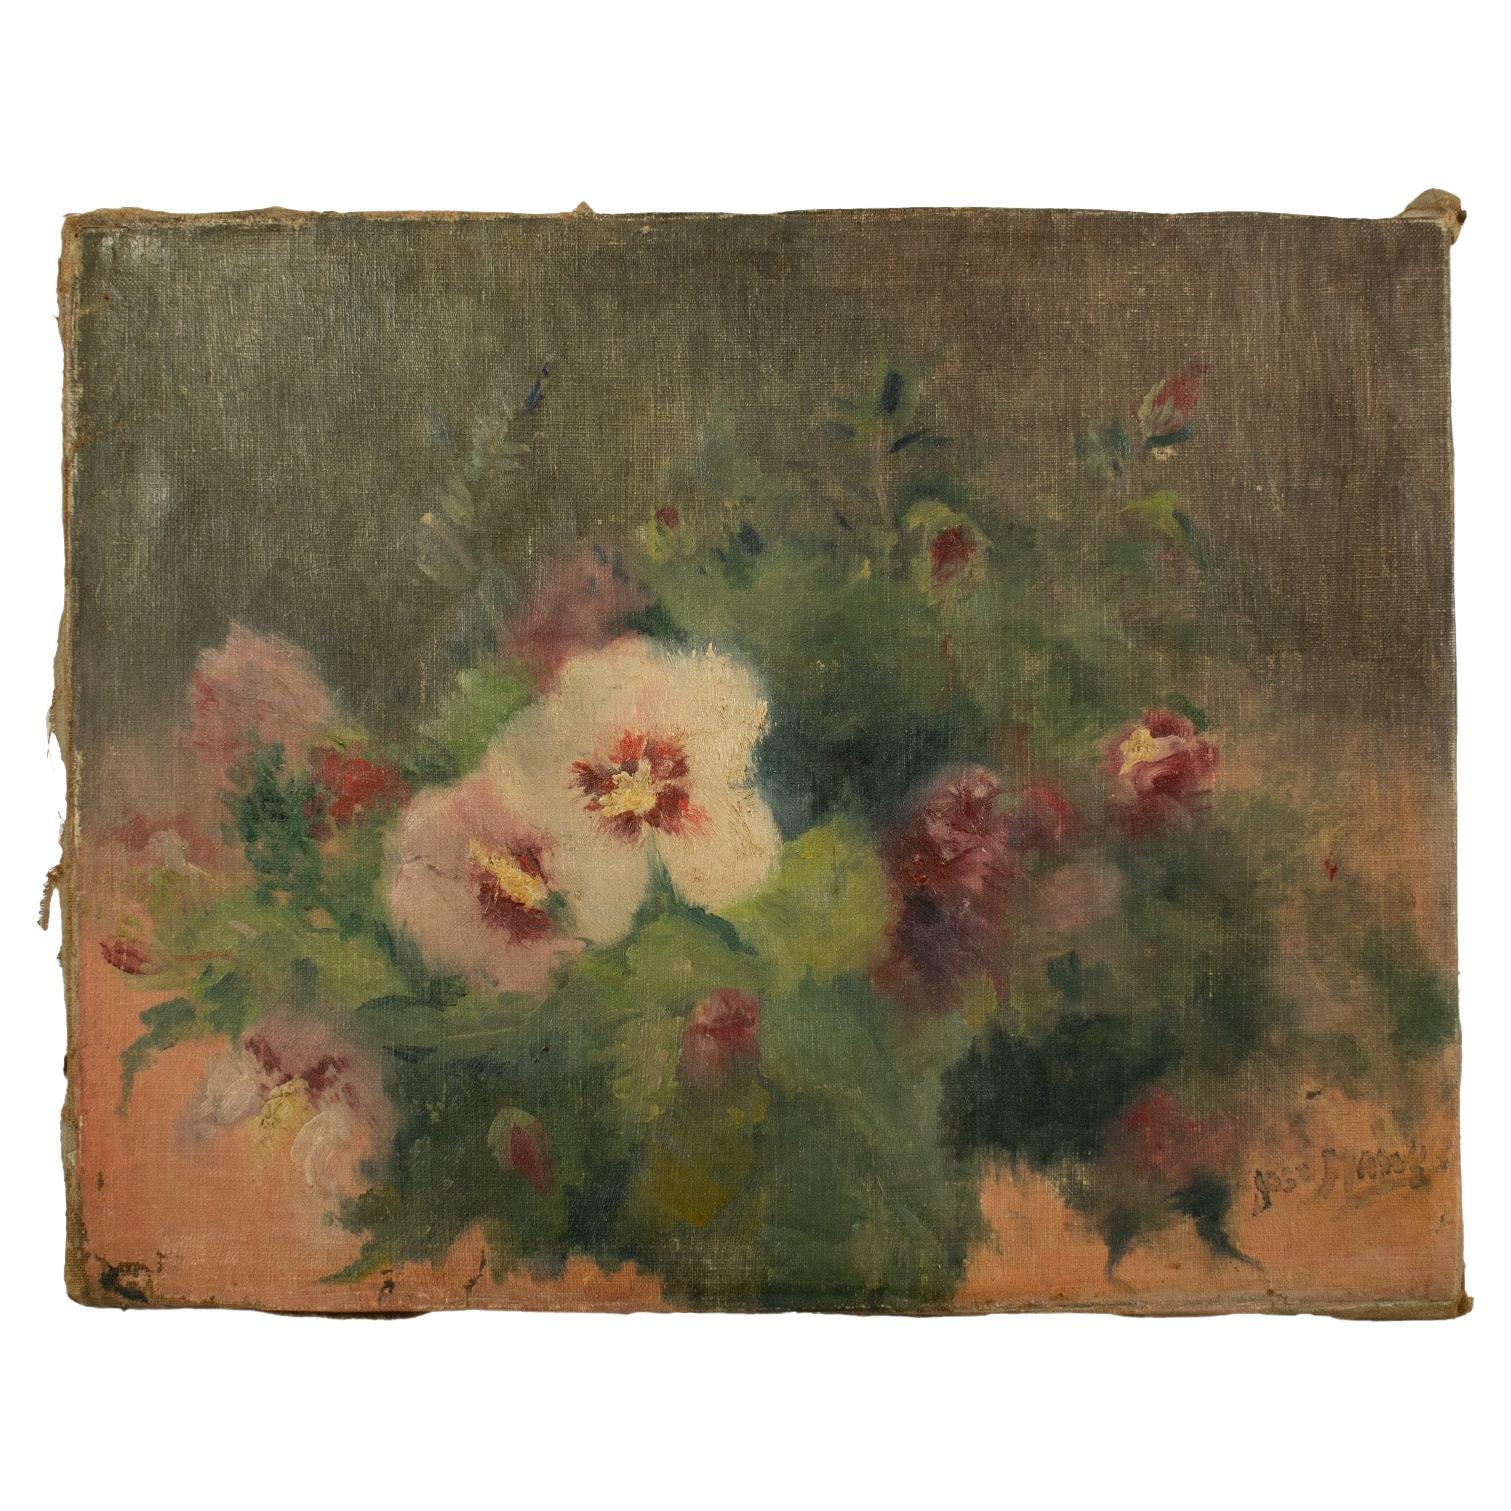 José MANGE (1866-1935) Still life with carnations, impressionist.